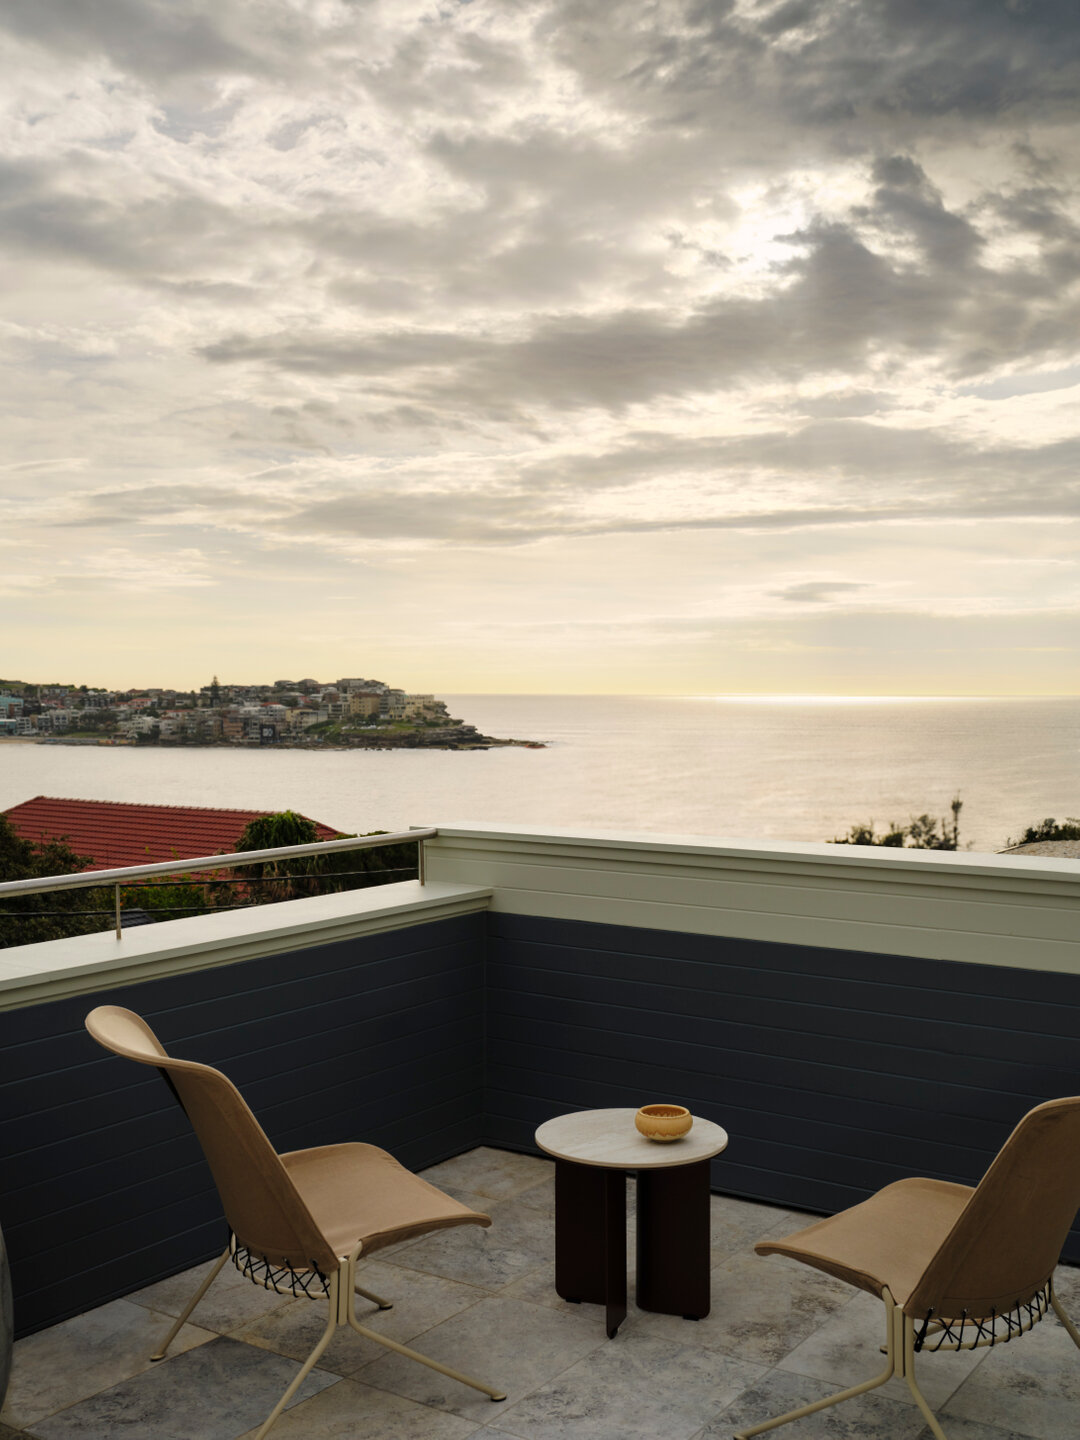 Headland views from our Fletcher House terrace ⁣
.
.
.
.
Design: SE D&Eacute;A
Construction: @robertplumb.fix
Photography: @dave_wheeler
Styling: @atelier_lab_⠀⠀⠀⠀⠀

#fletcherhousetamarama #tamaramahouse #balconydesign #oceanviews  #oceanliving #sede